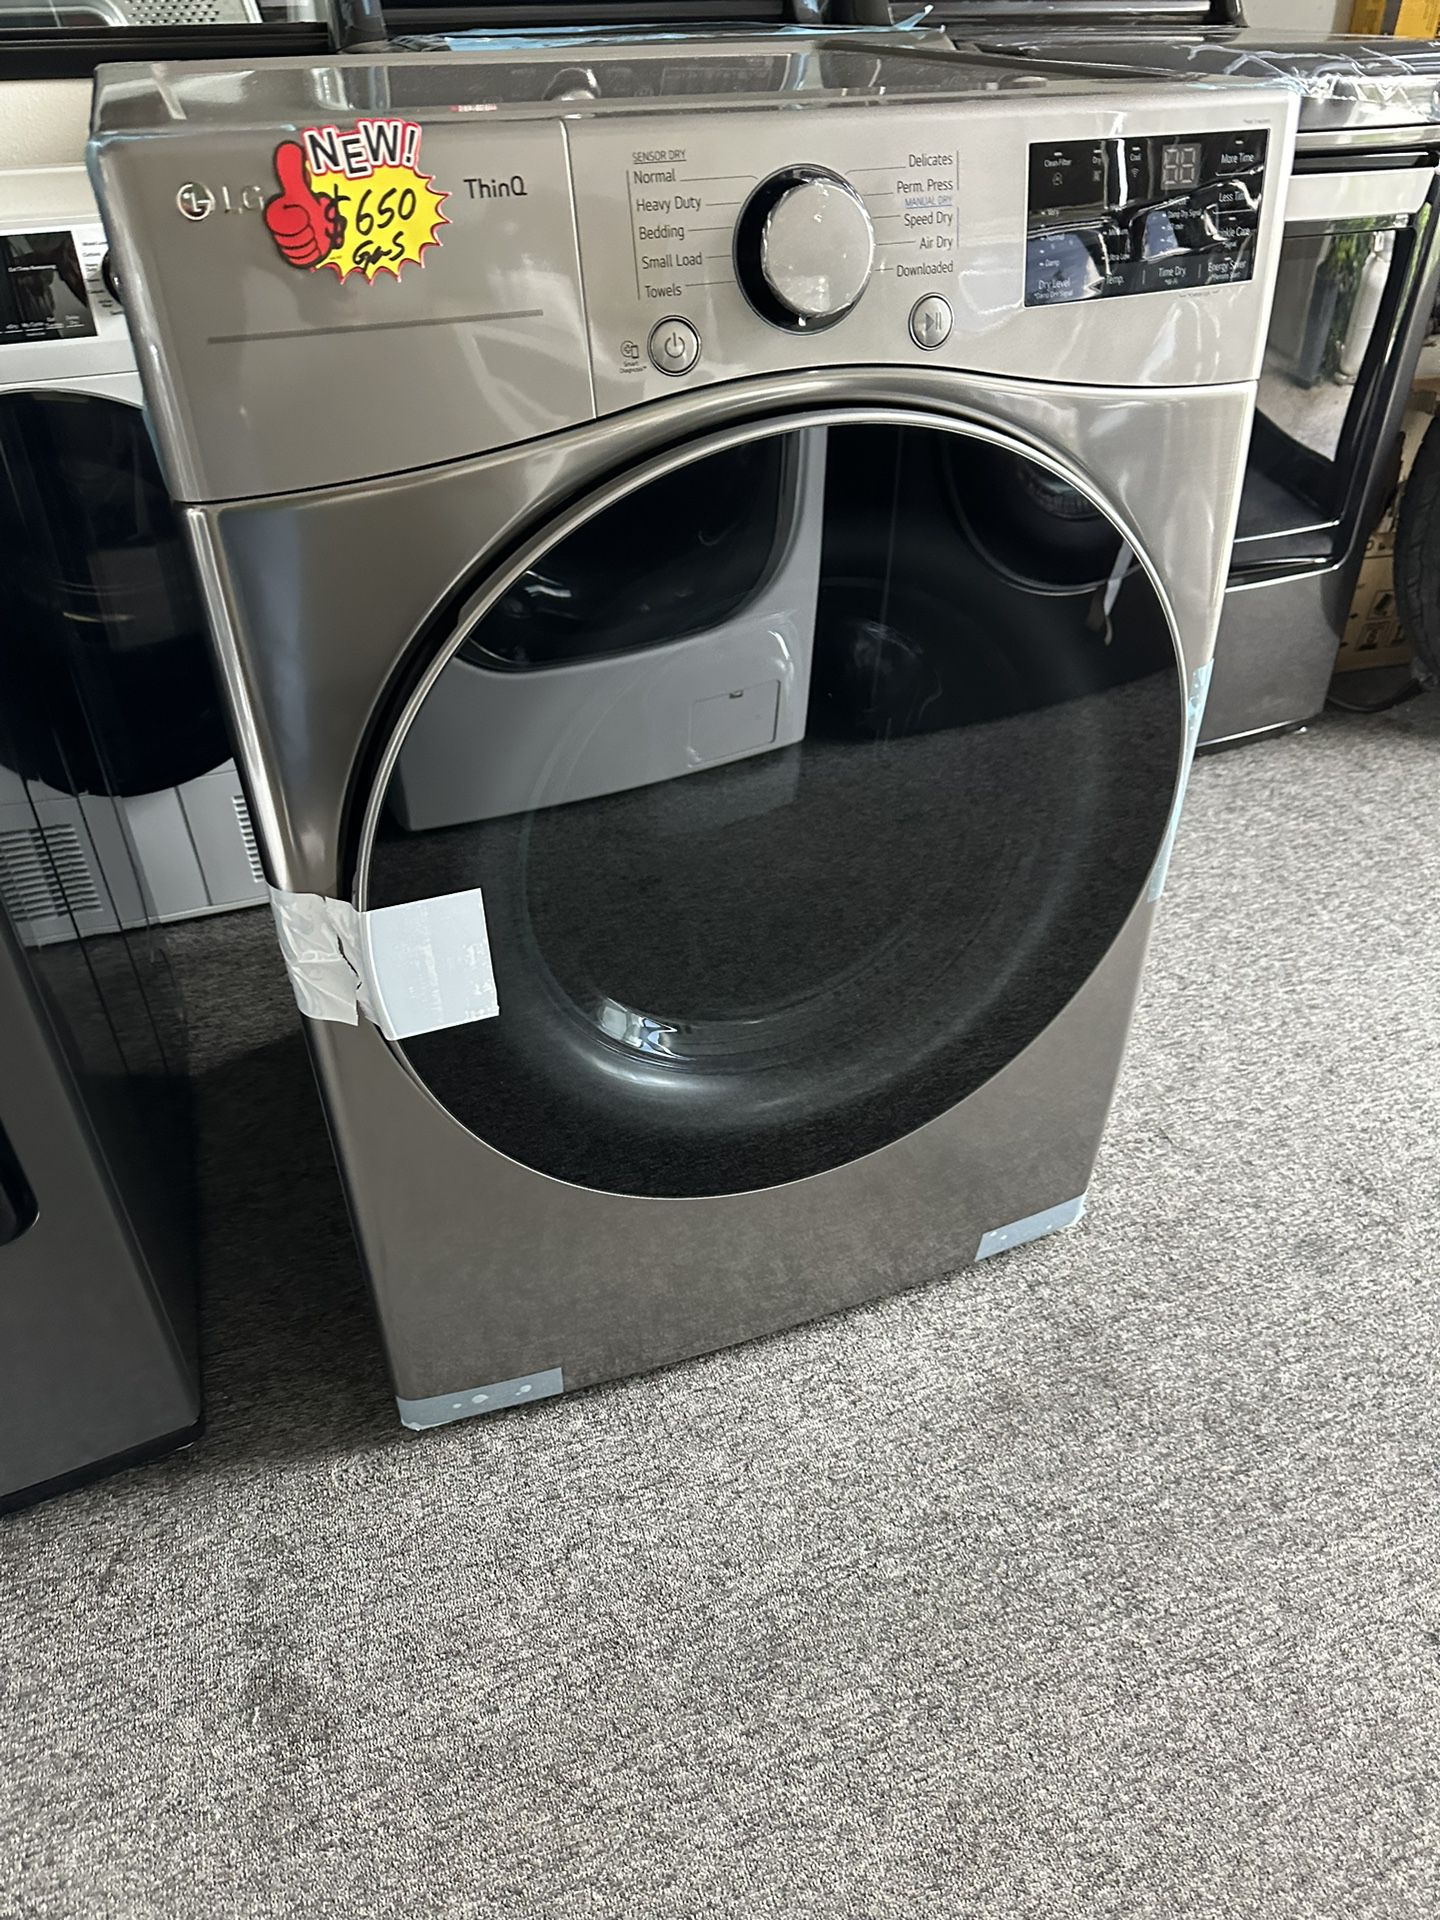 LG Gas Dryer 